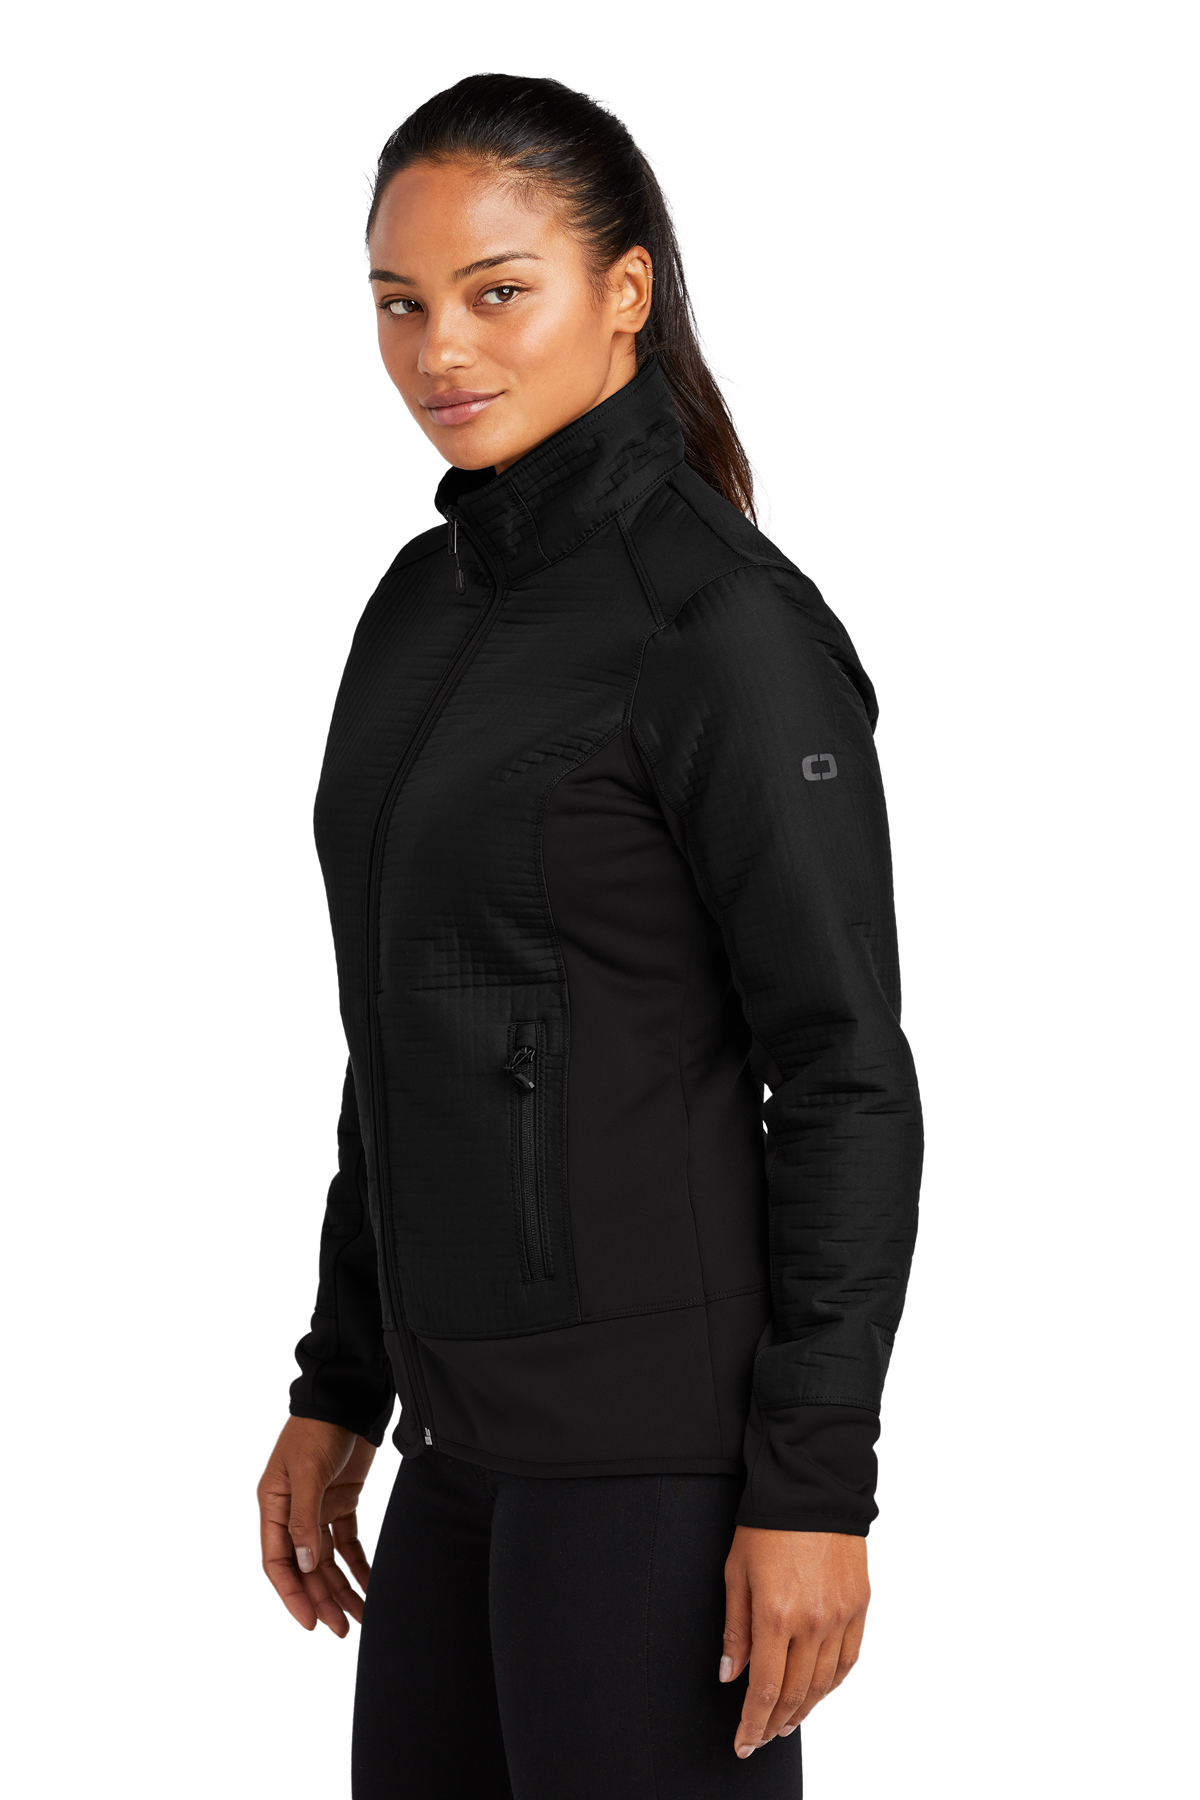 OGIO Ladies Trax Jacket | Product | SanMar